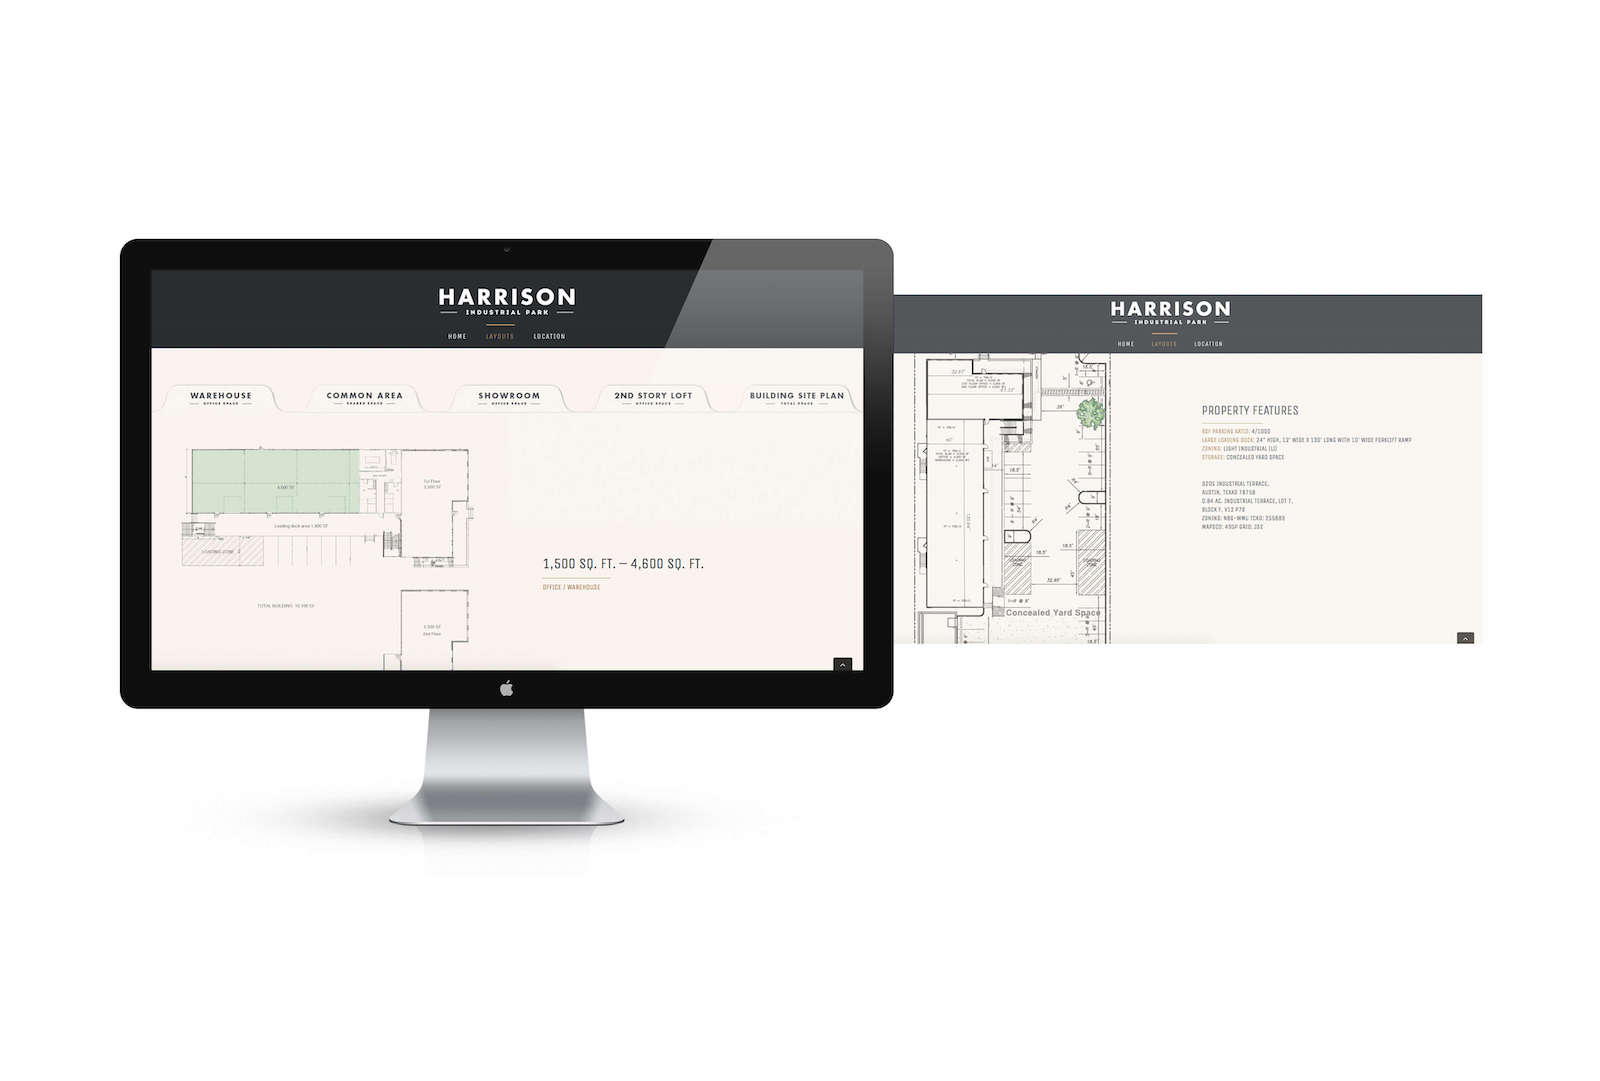 Harrison Industrial Park Website Design